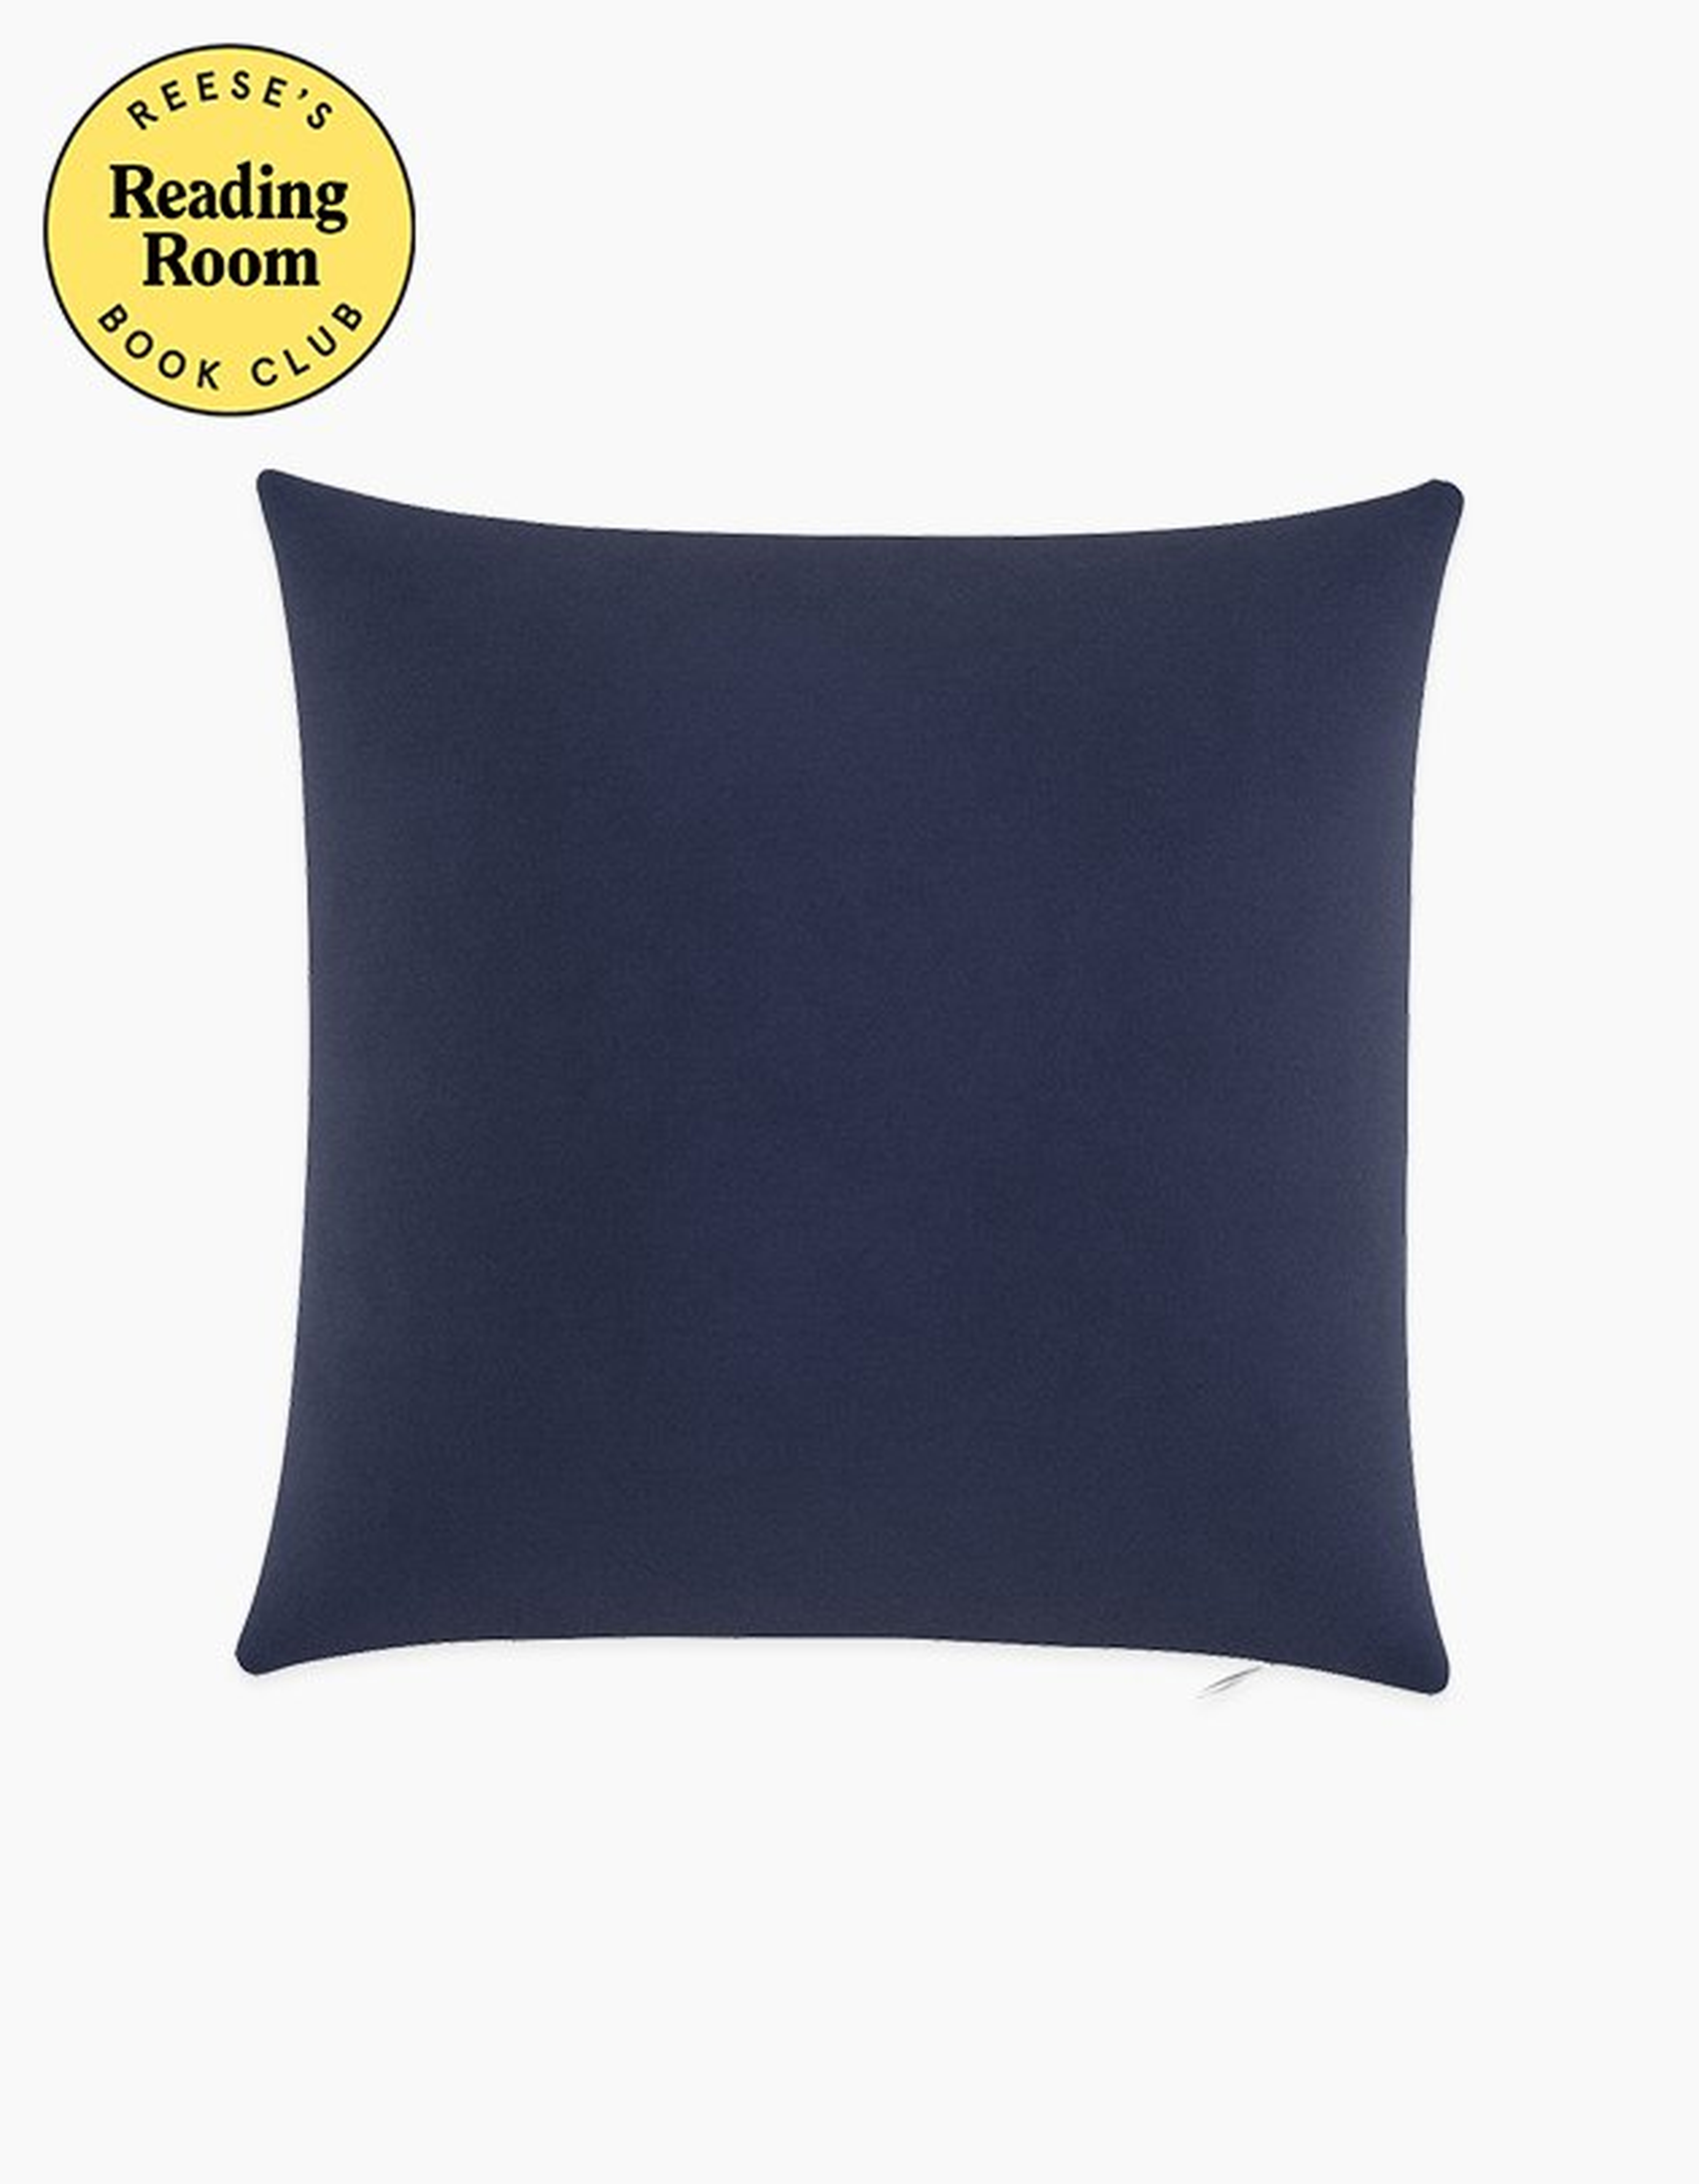 Navy Velvet Throw Pillow - 20" x 20" - Reese's Book Club x Havenly